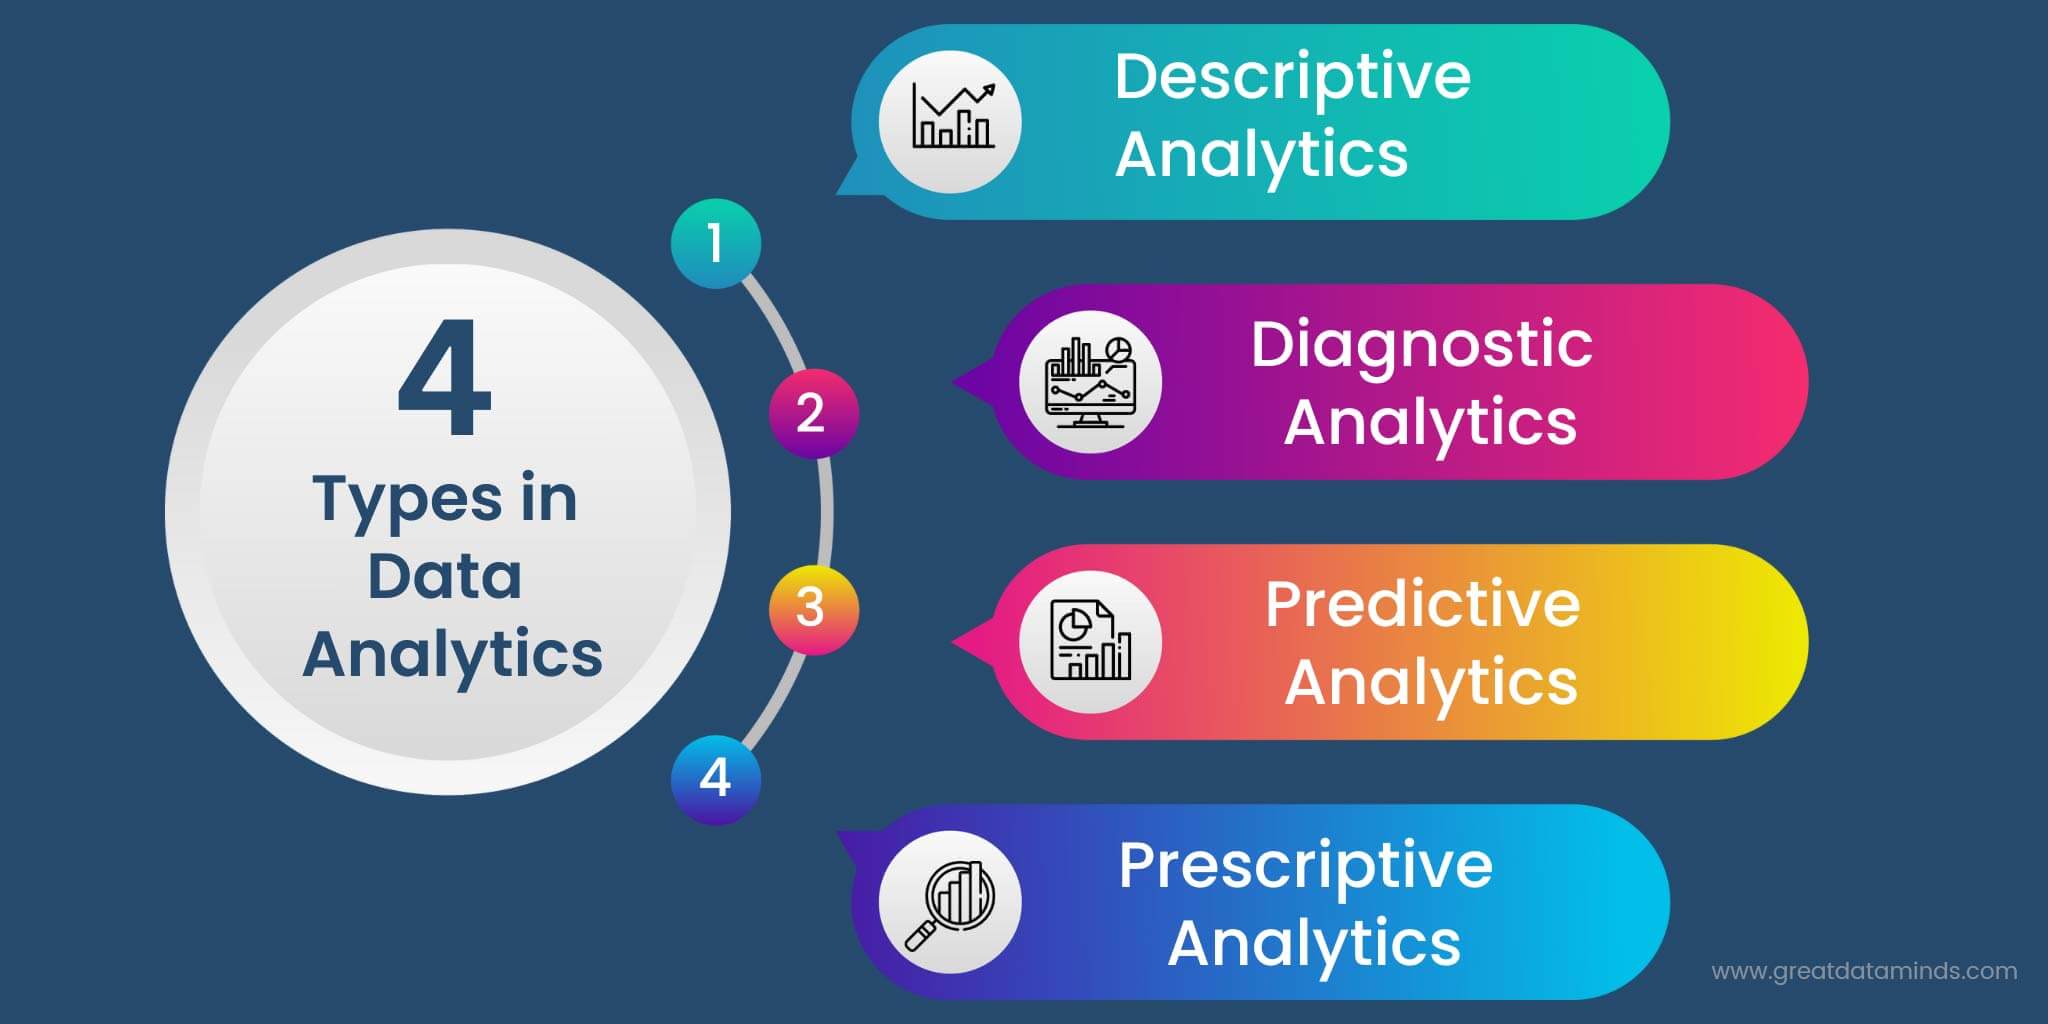 4 Areas of Data Analytics